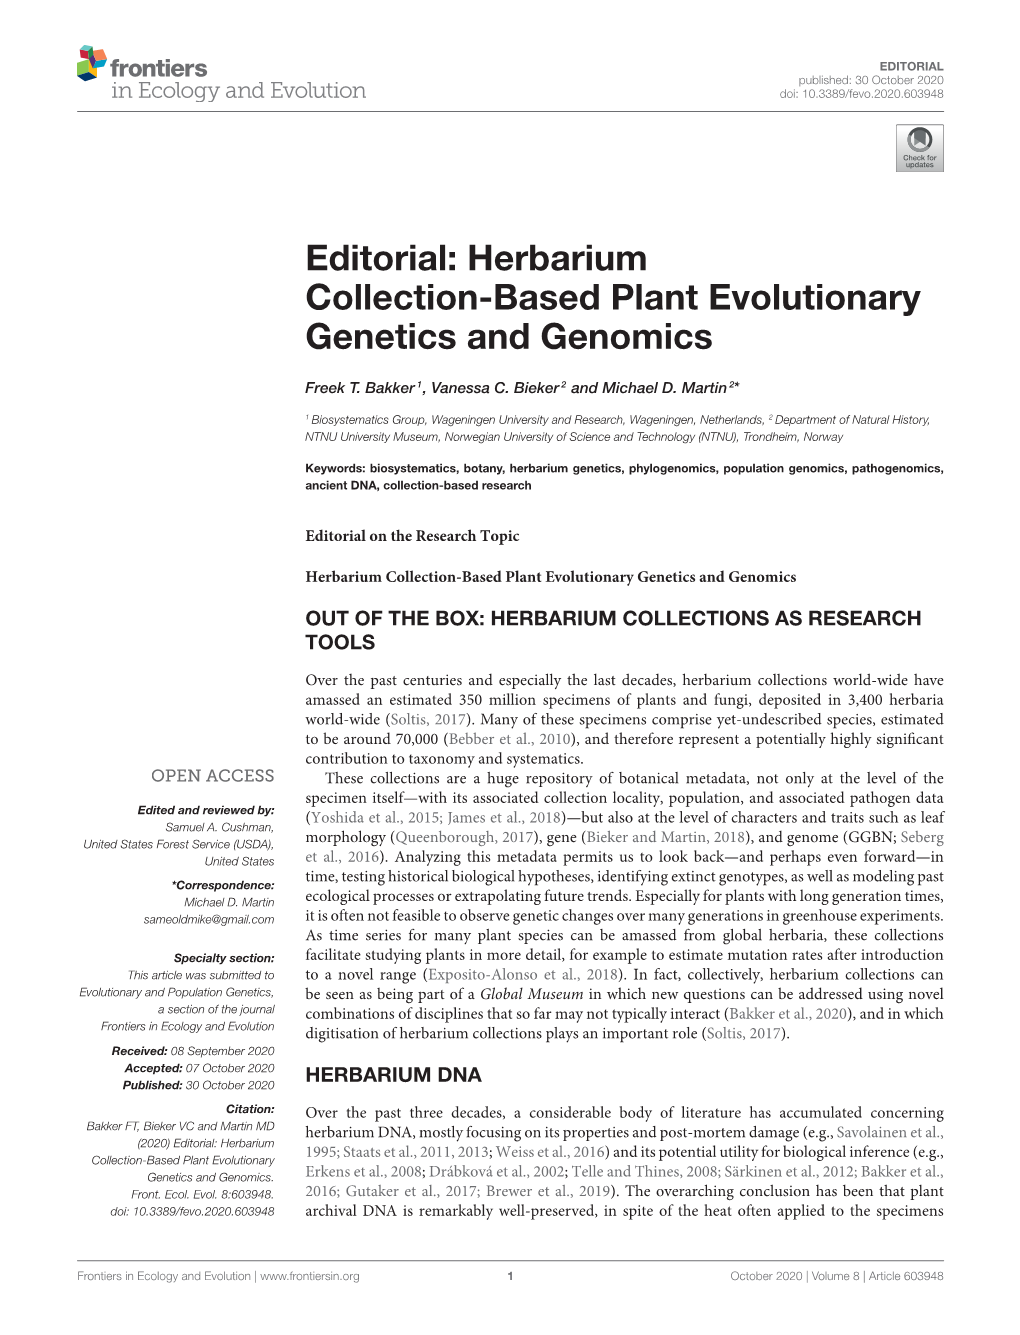 Herbarium Collection-Based Plant Evolutionary Genetics and Genomics